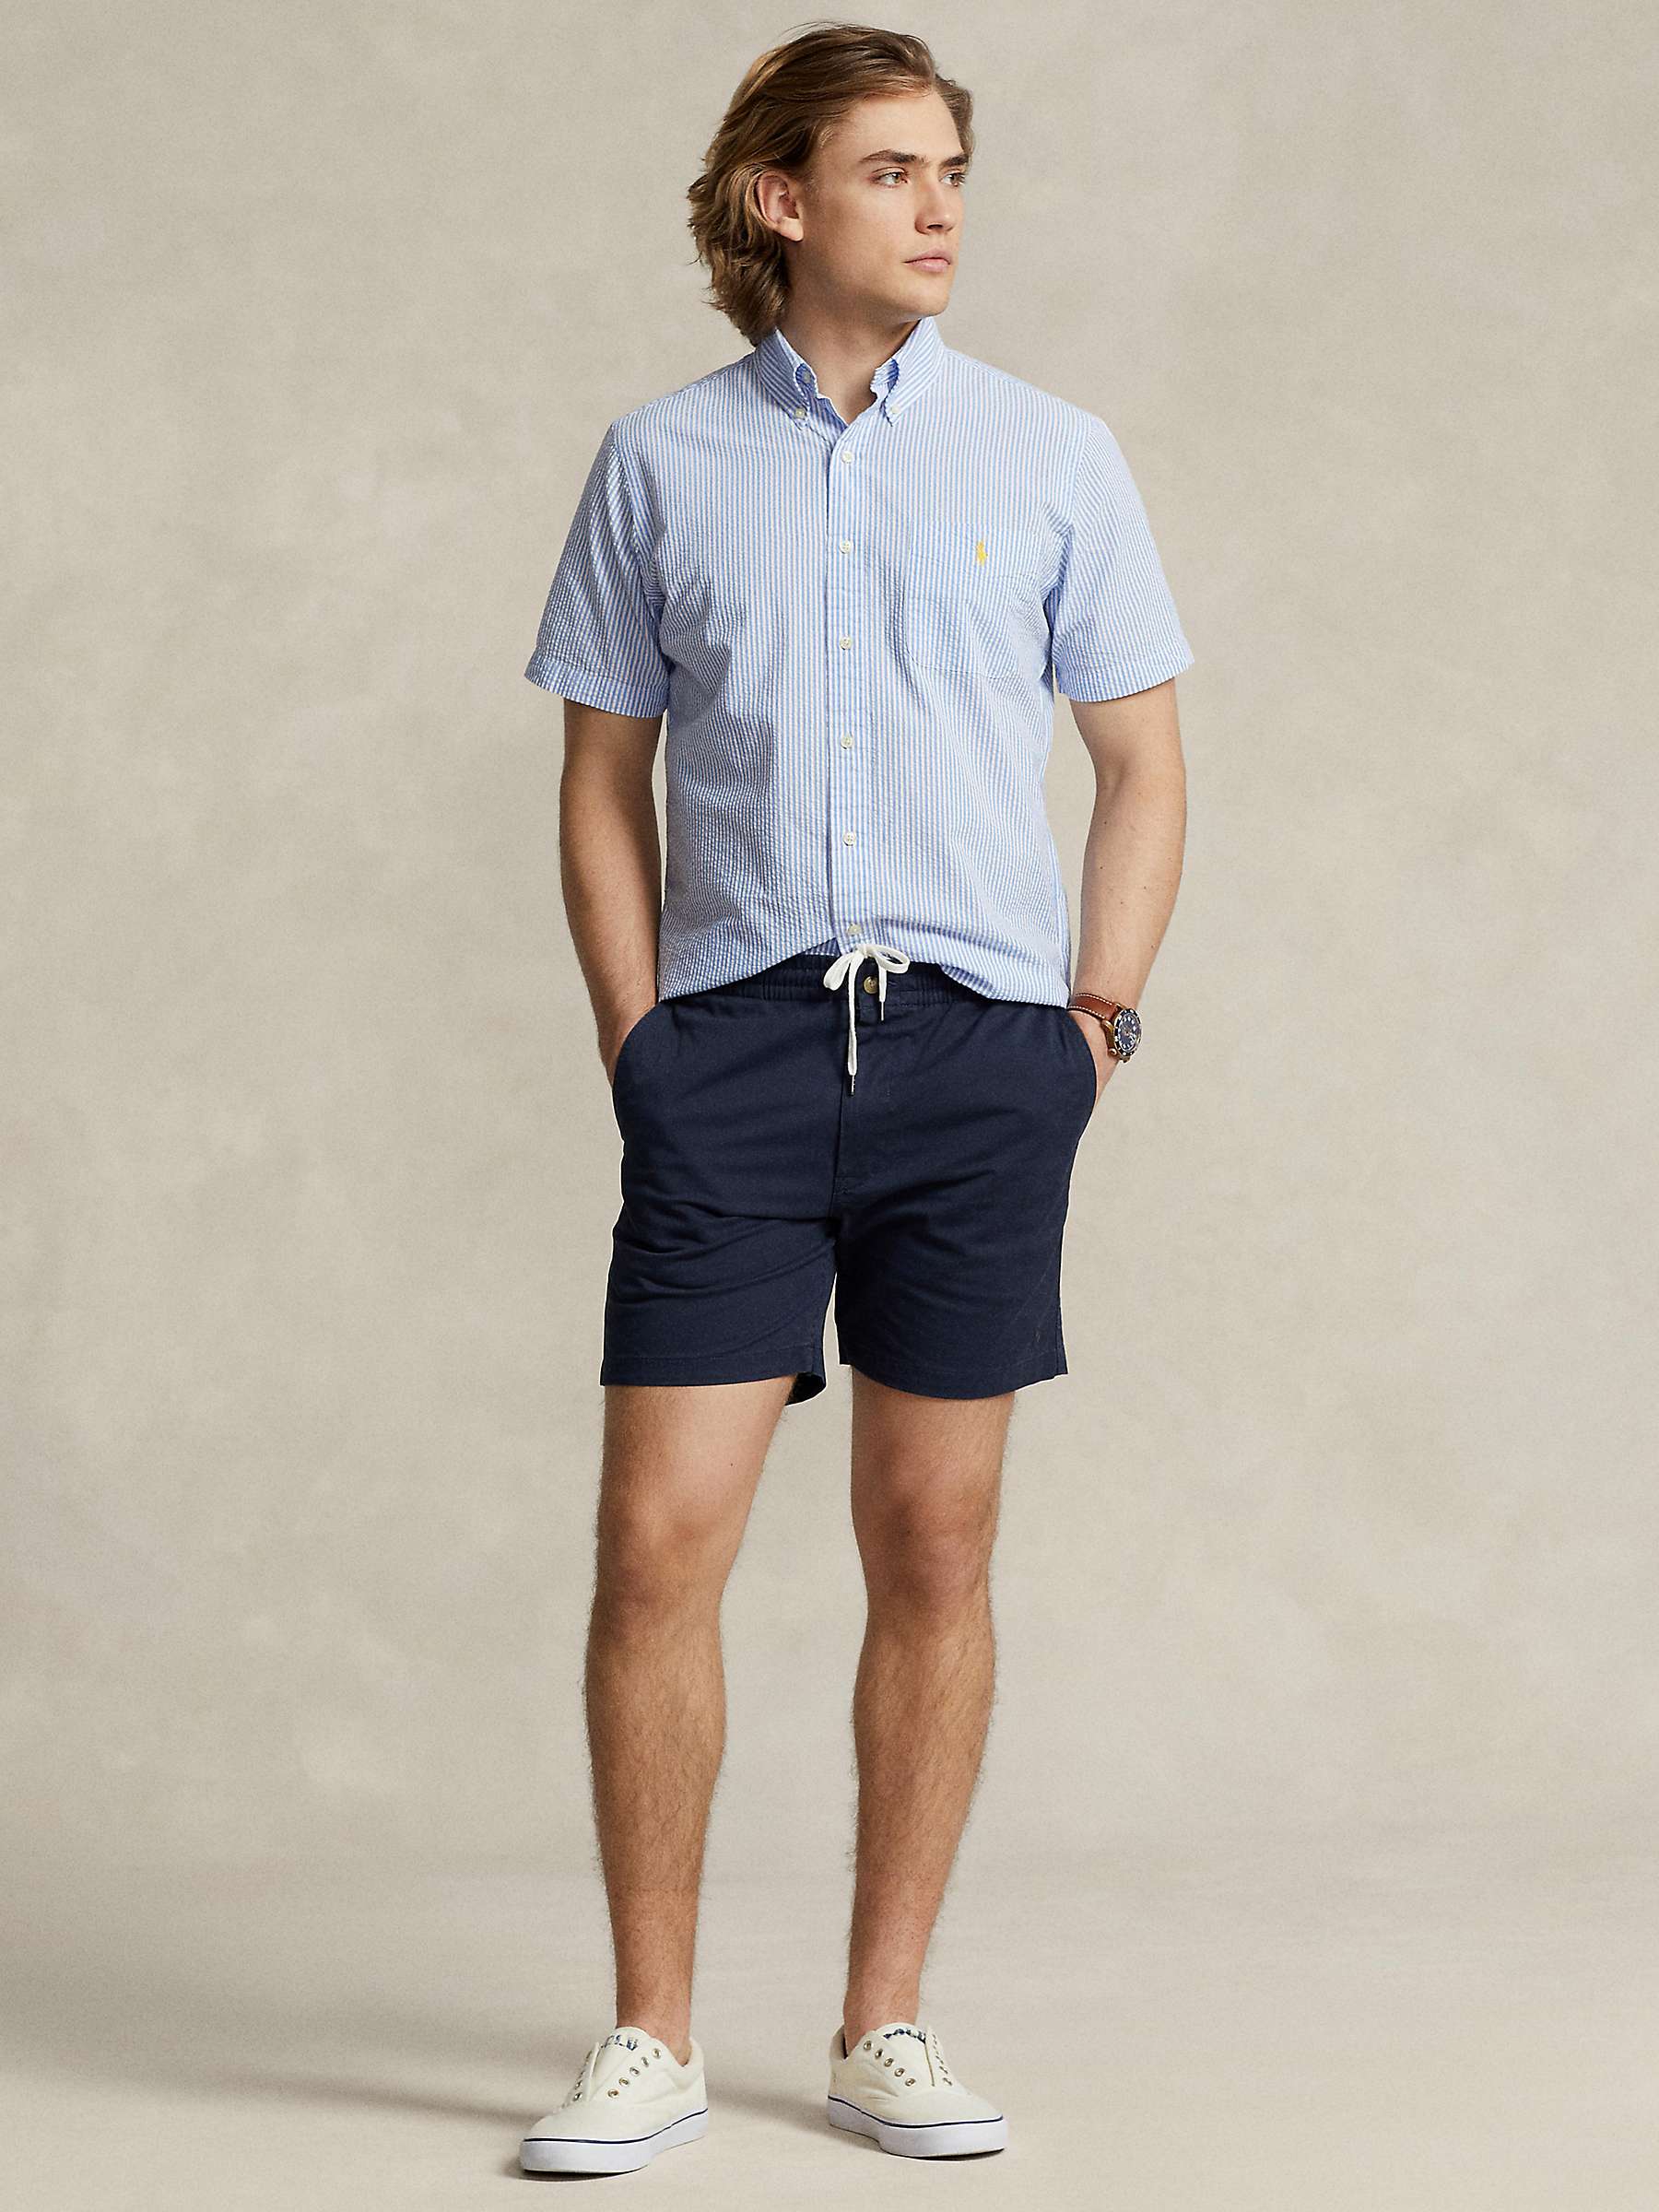 Buy Ralph Lauren Custom Fit Striped Seersucker Shirt, Blue/White Online at johnlewis.com